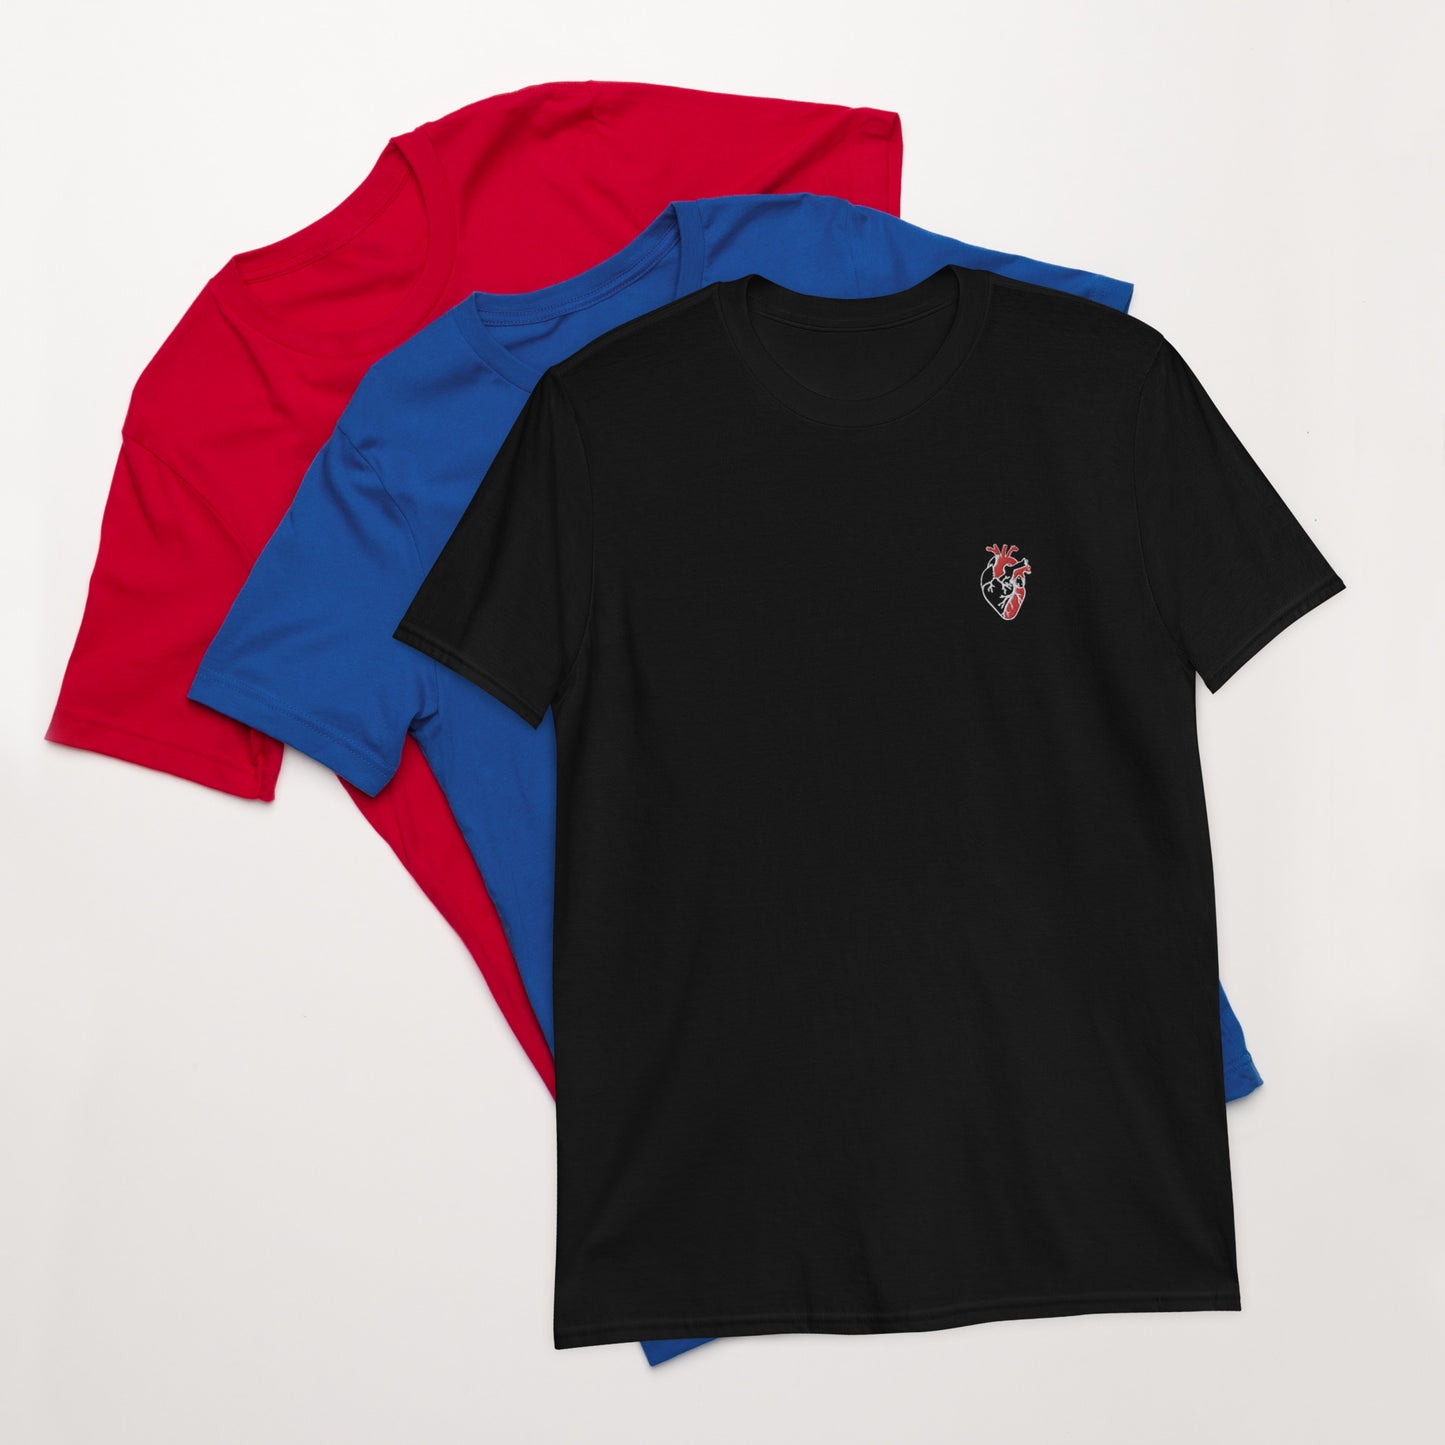 RBW - Beating Heart Short-Sleeve Unisex T-Shirt.